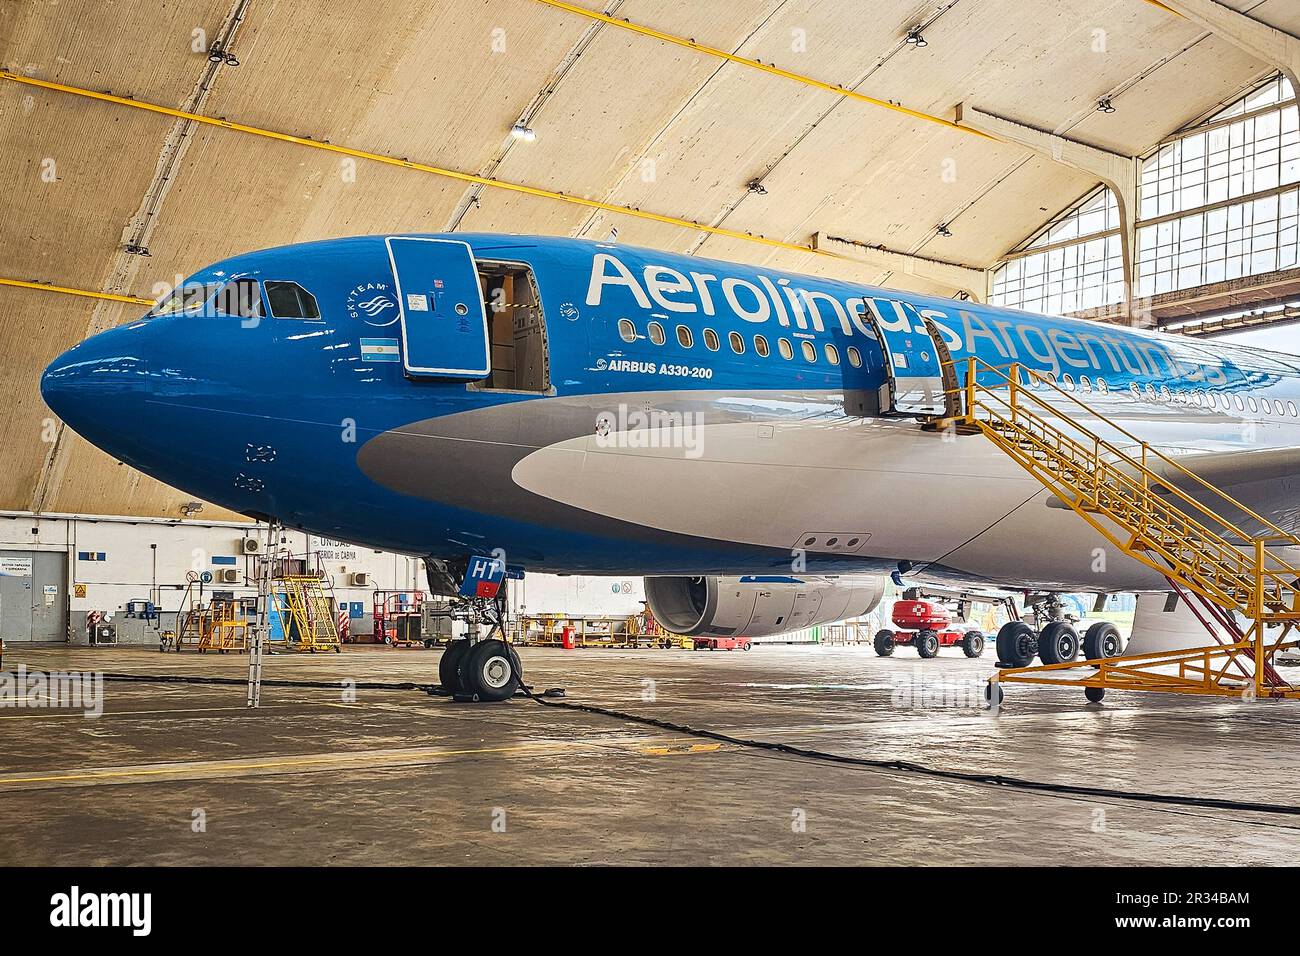 Airbus A330-200 plane Aerolineas Argentinas Stock Photo